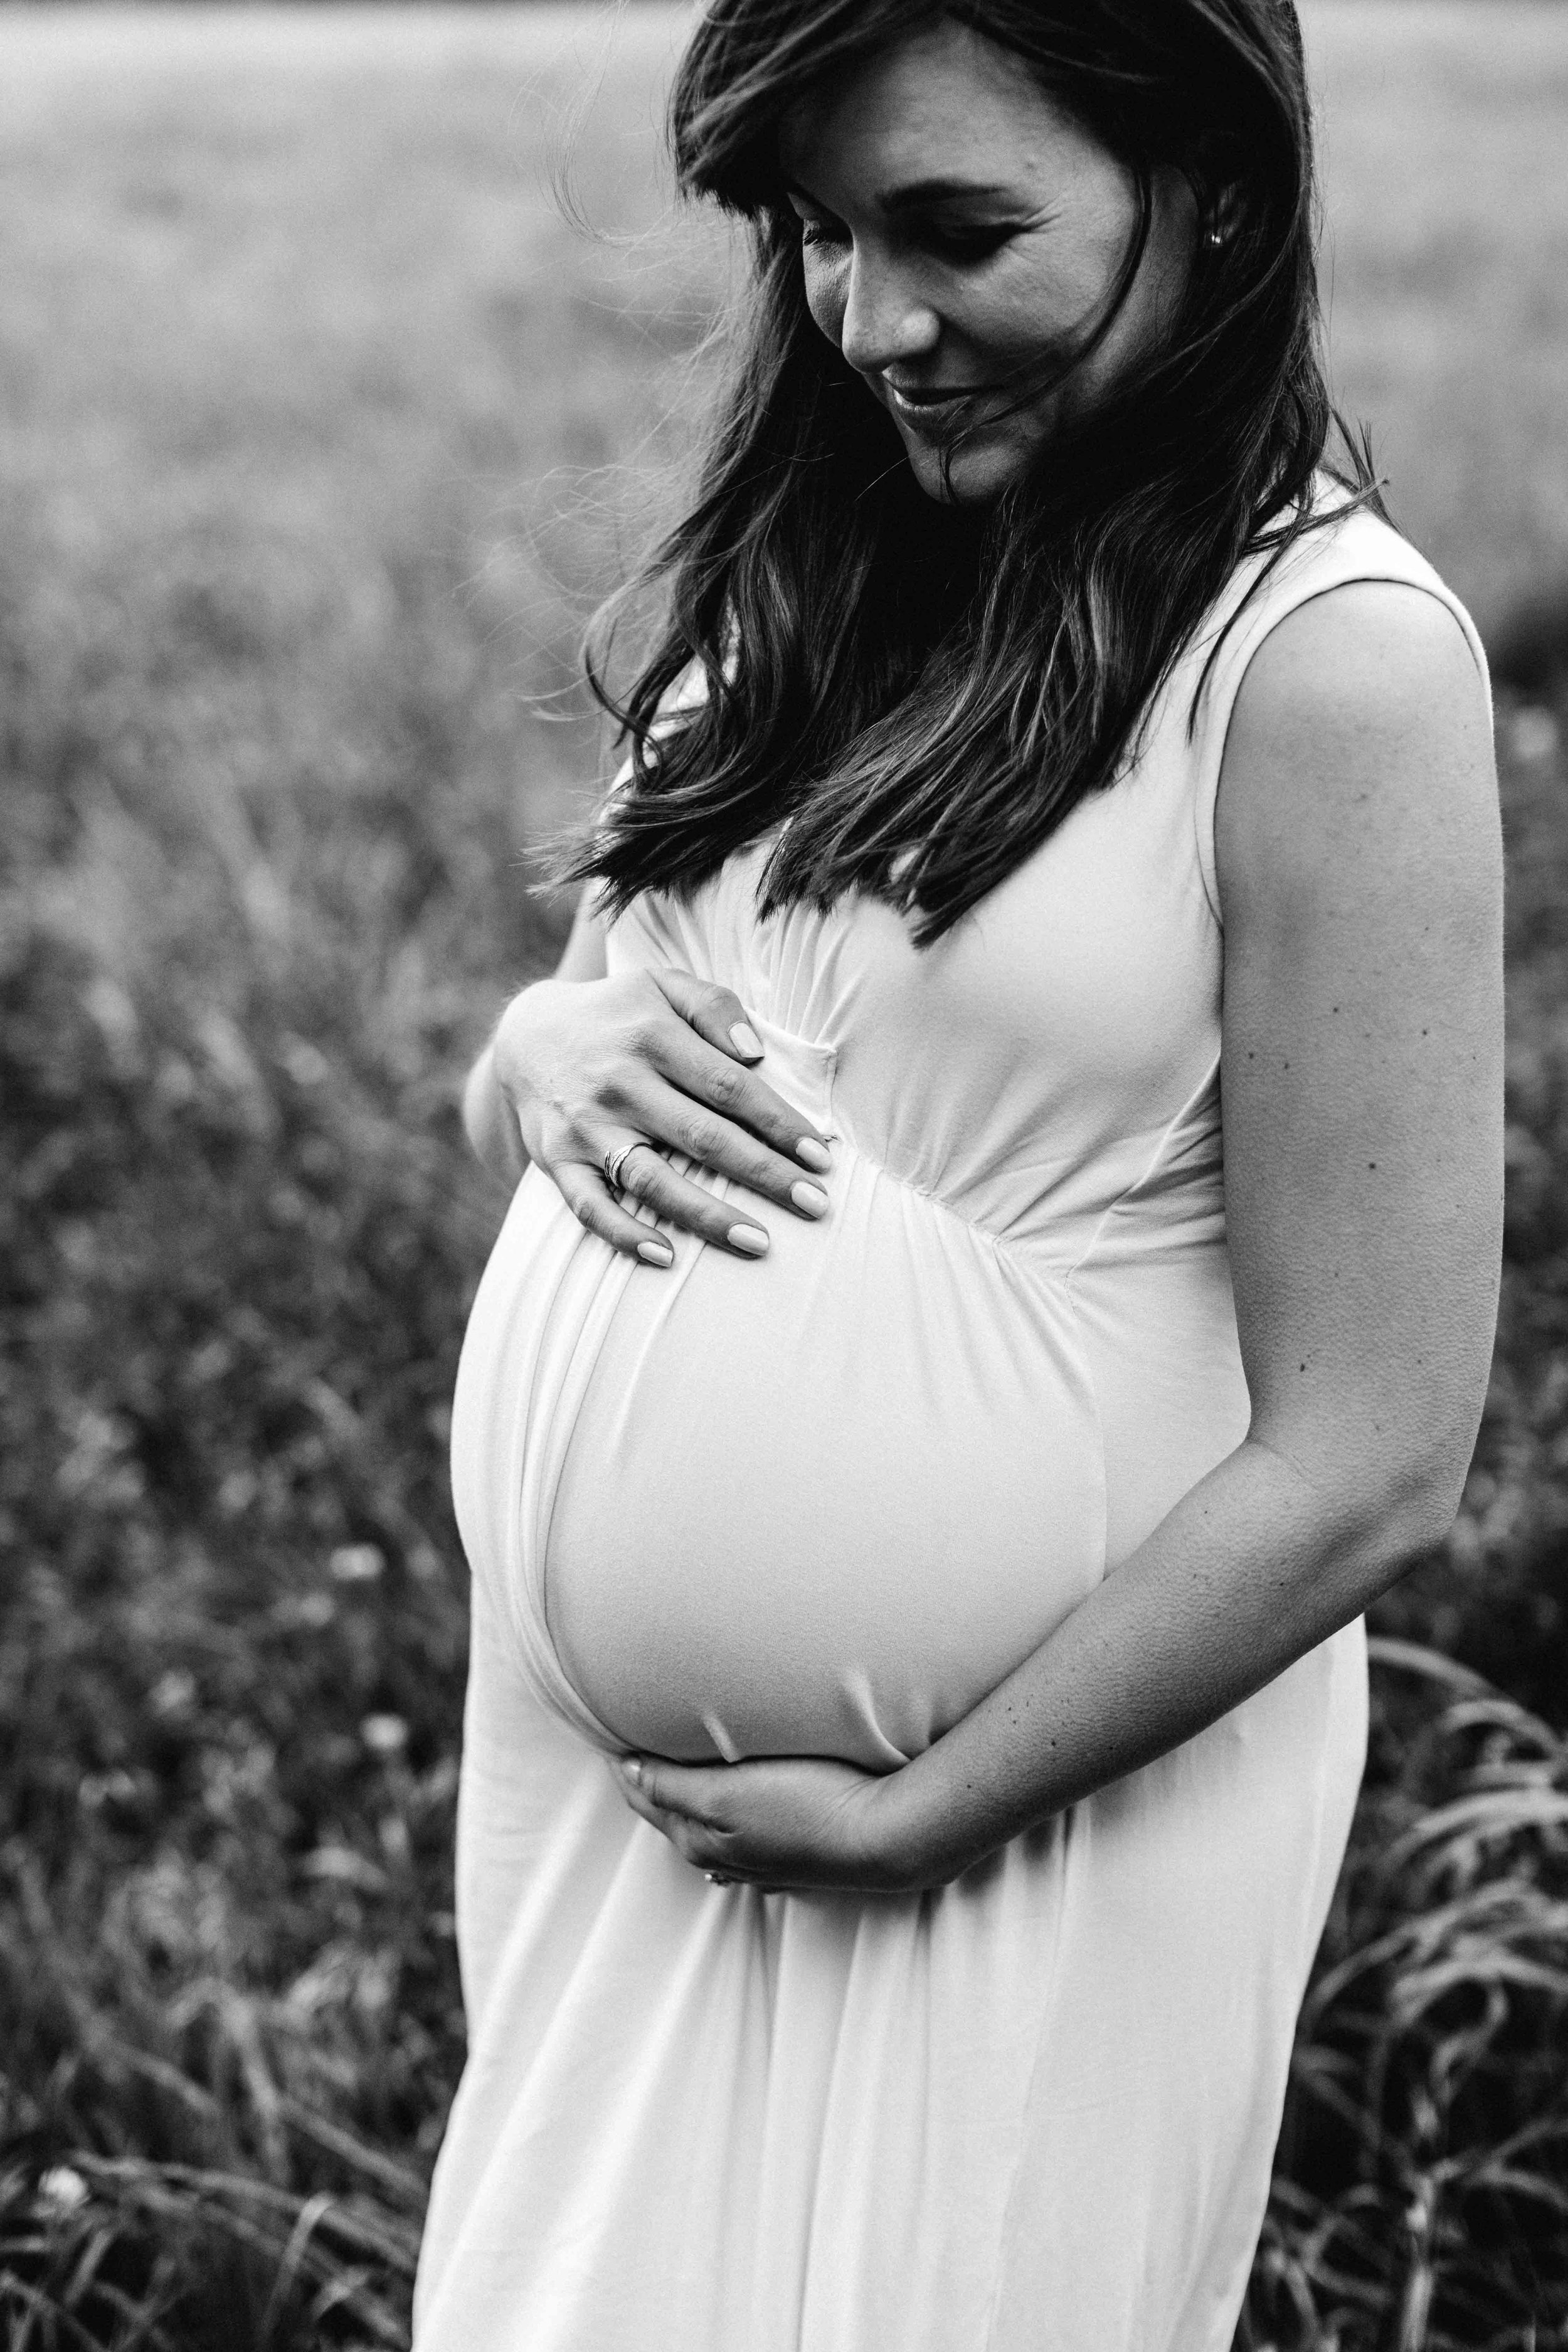 brownlow-hill-camden-maternity-photography-shoot-bonnie-bush-www.emilyobrienphotography.net-25.jpg